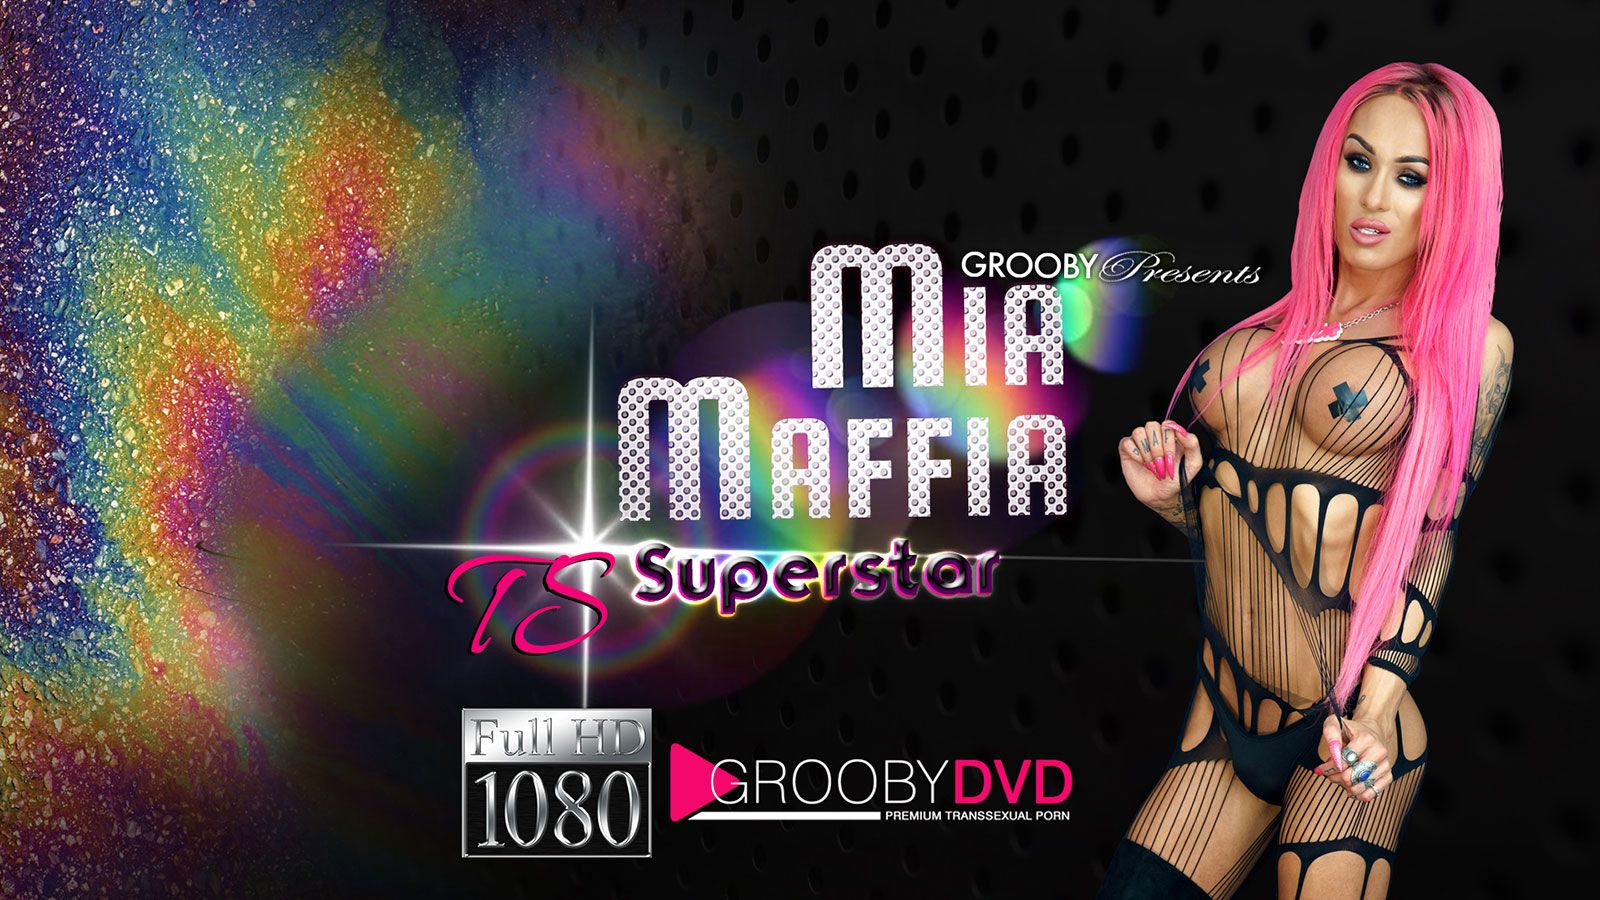 Grooby Releases Star Showcase ‘Mia Maffia: TS Superstar’